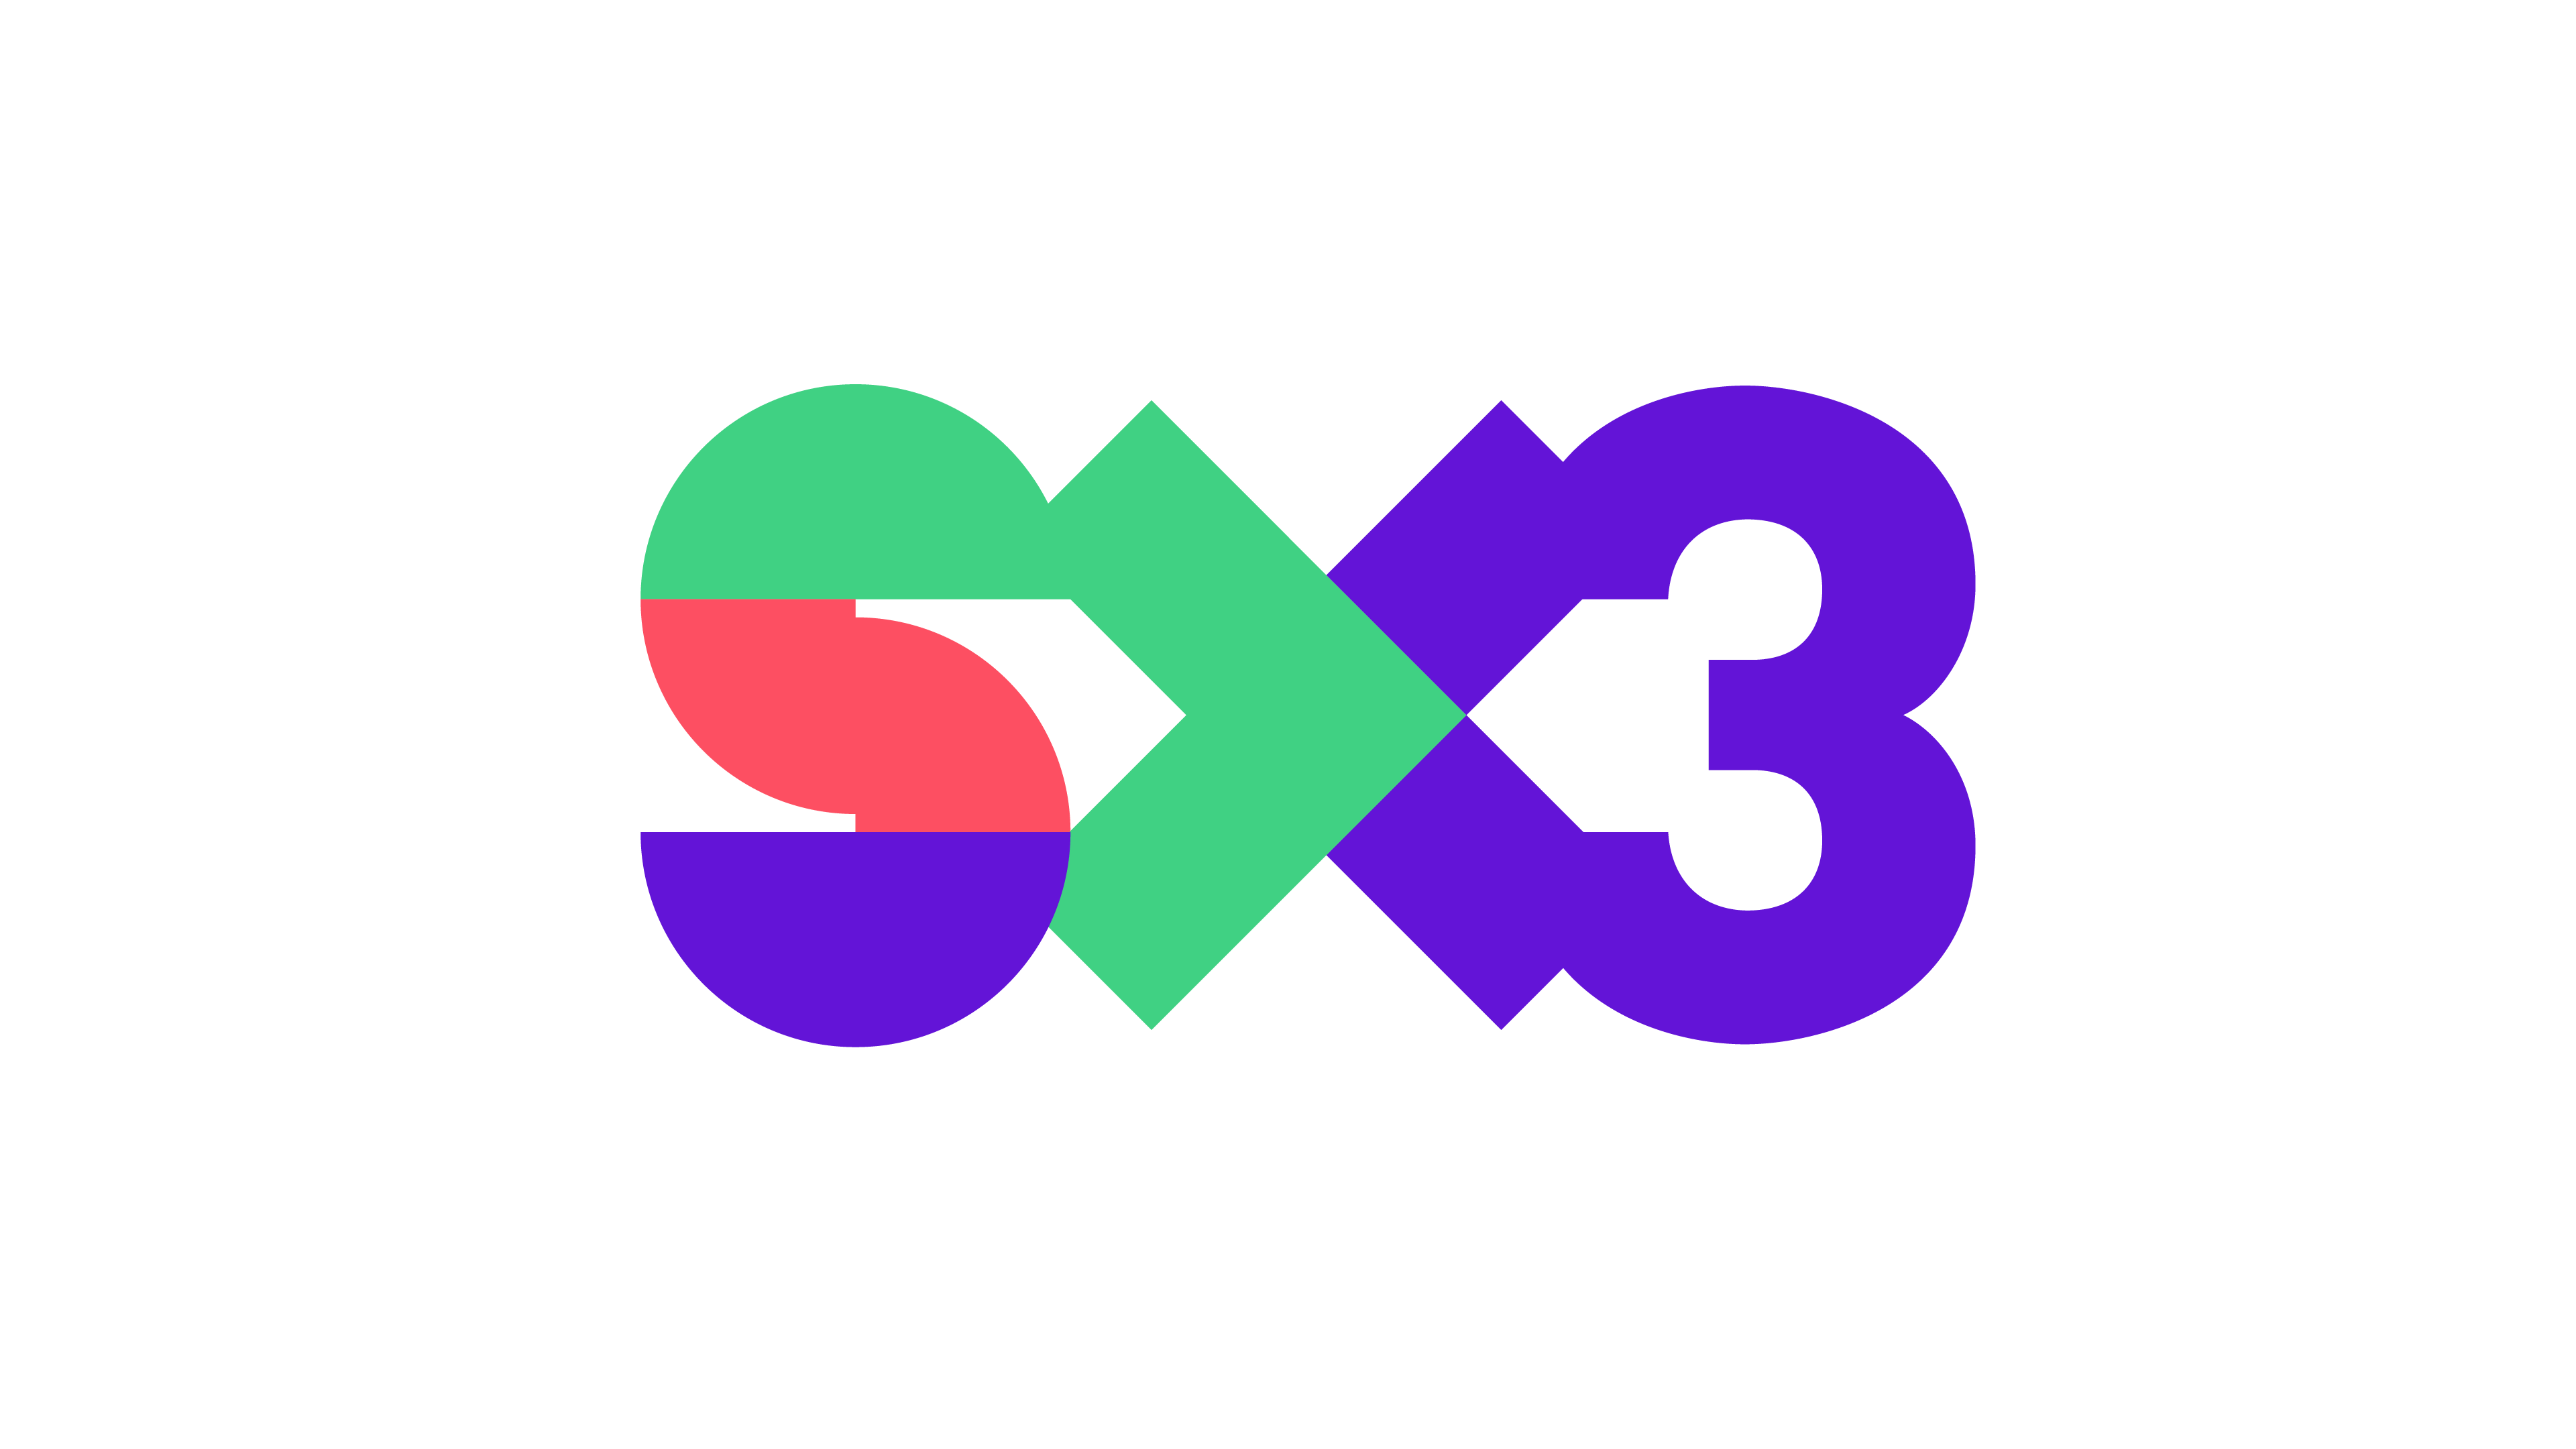 SX3 positiu2x